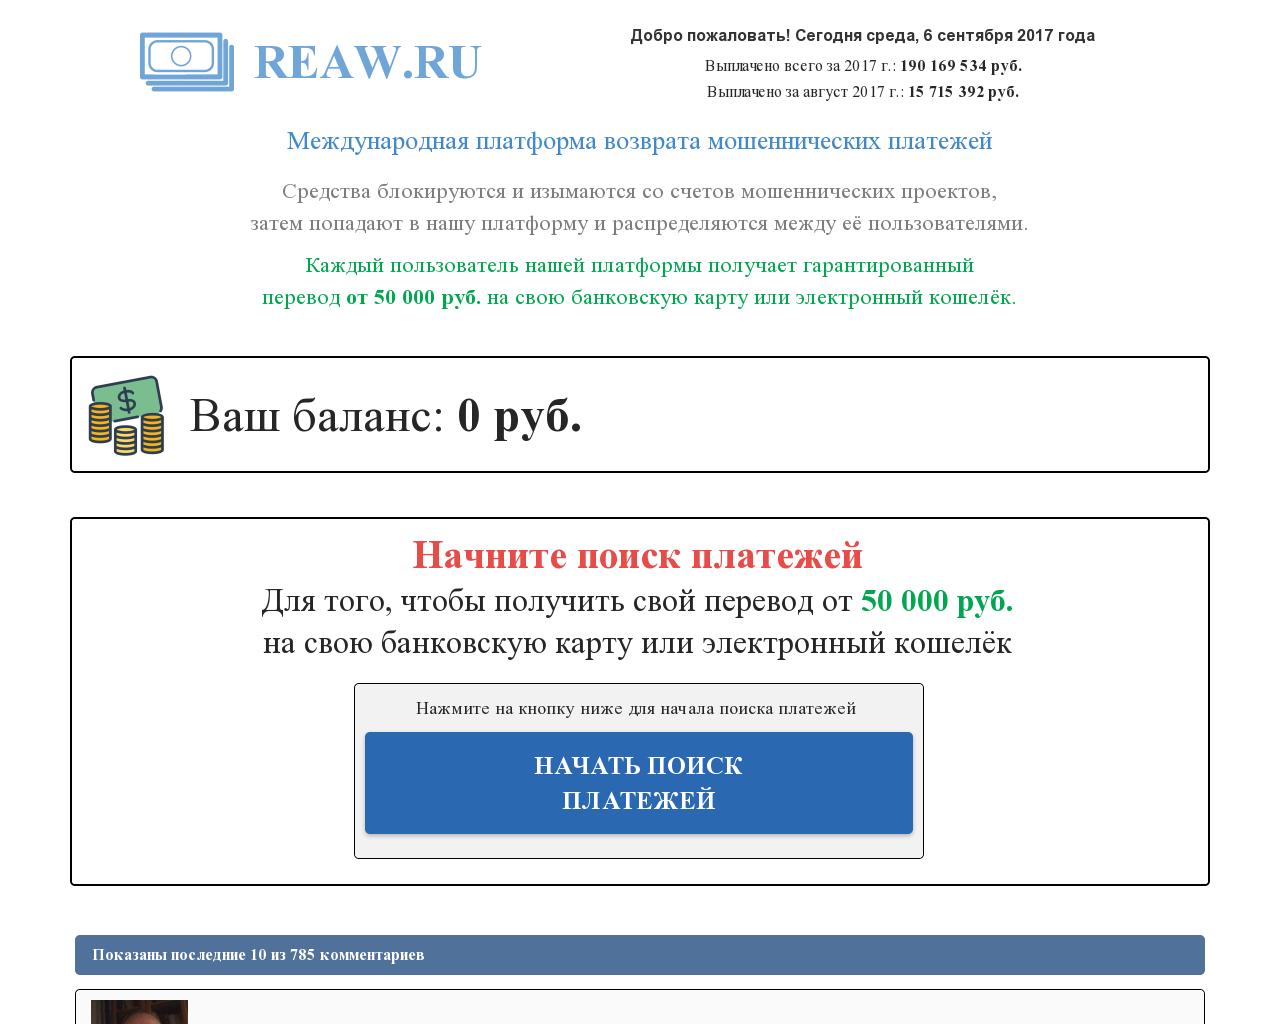 Изображение сайта reaw.ru в разрешении 1280x1024